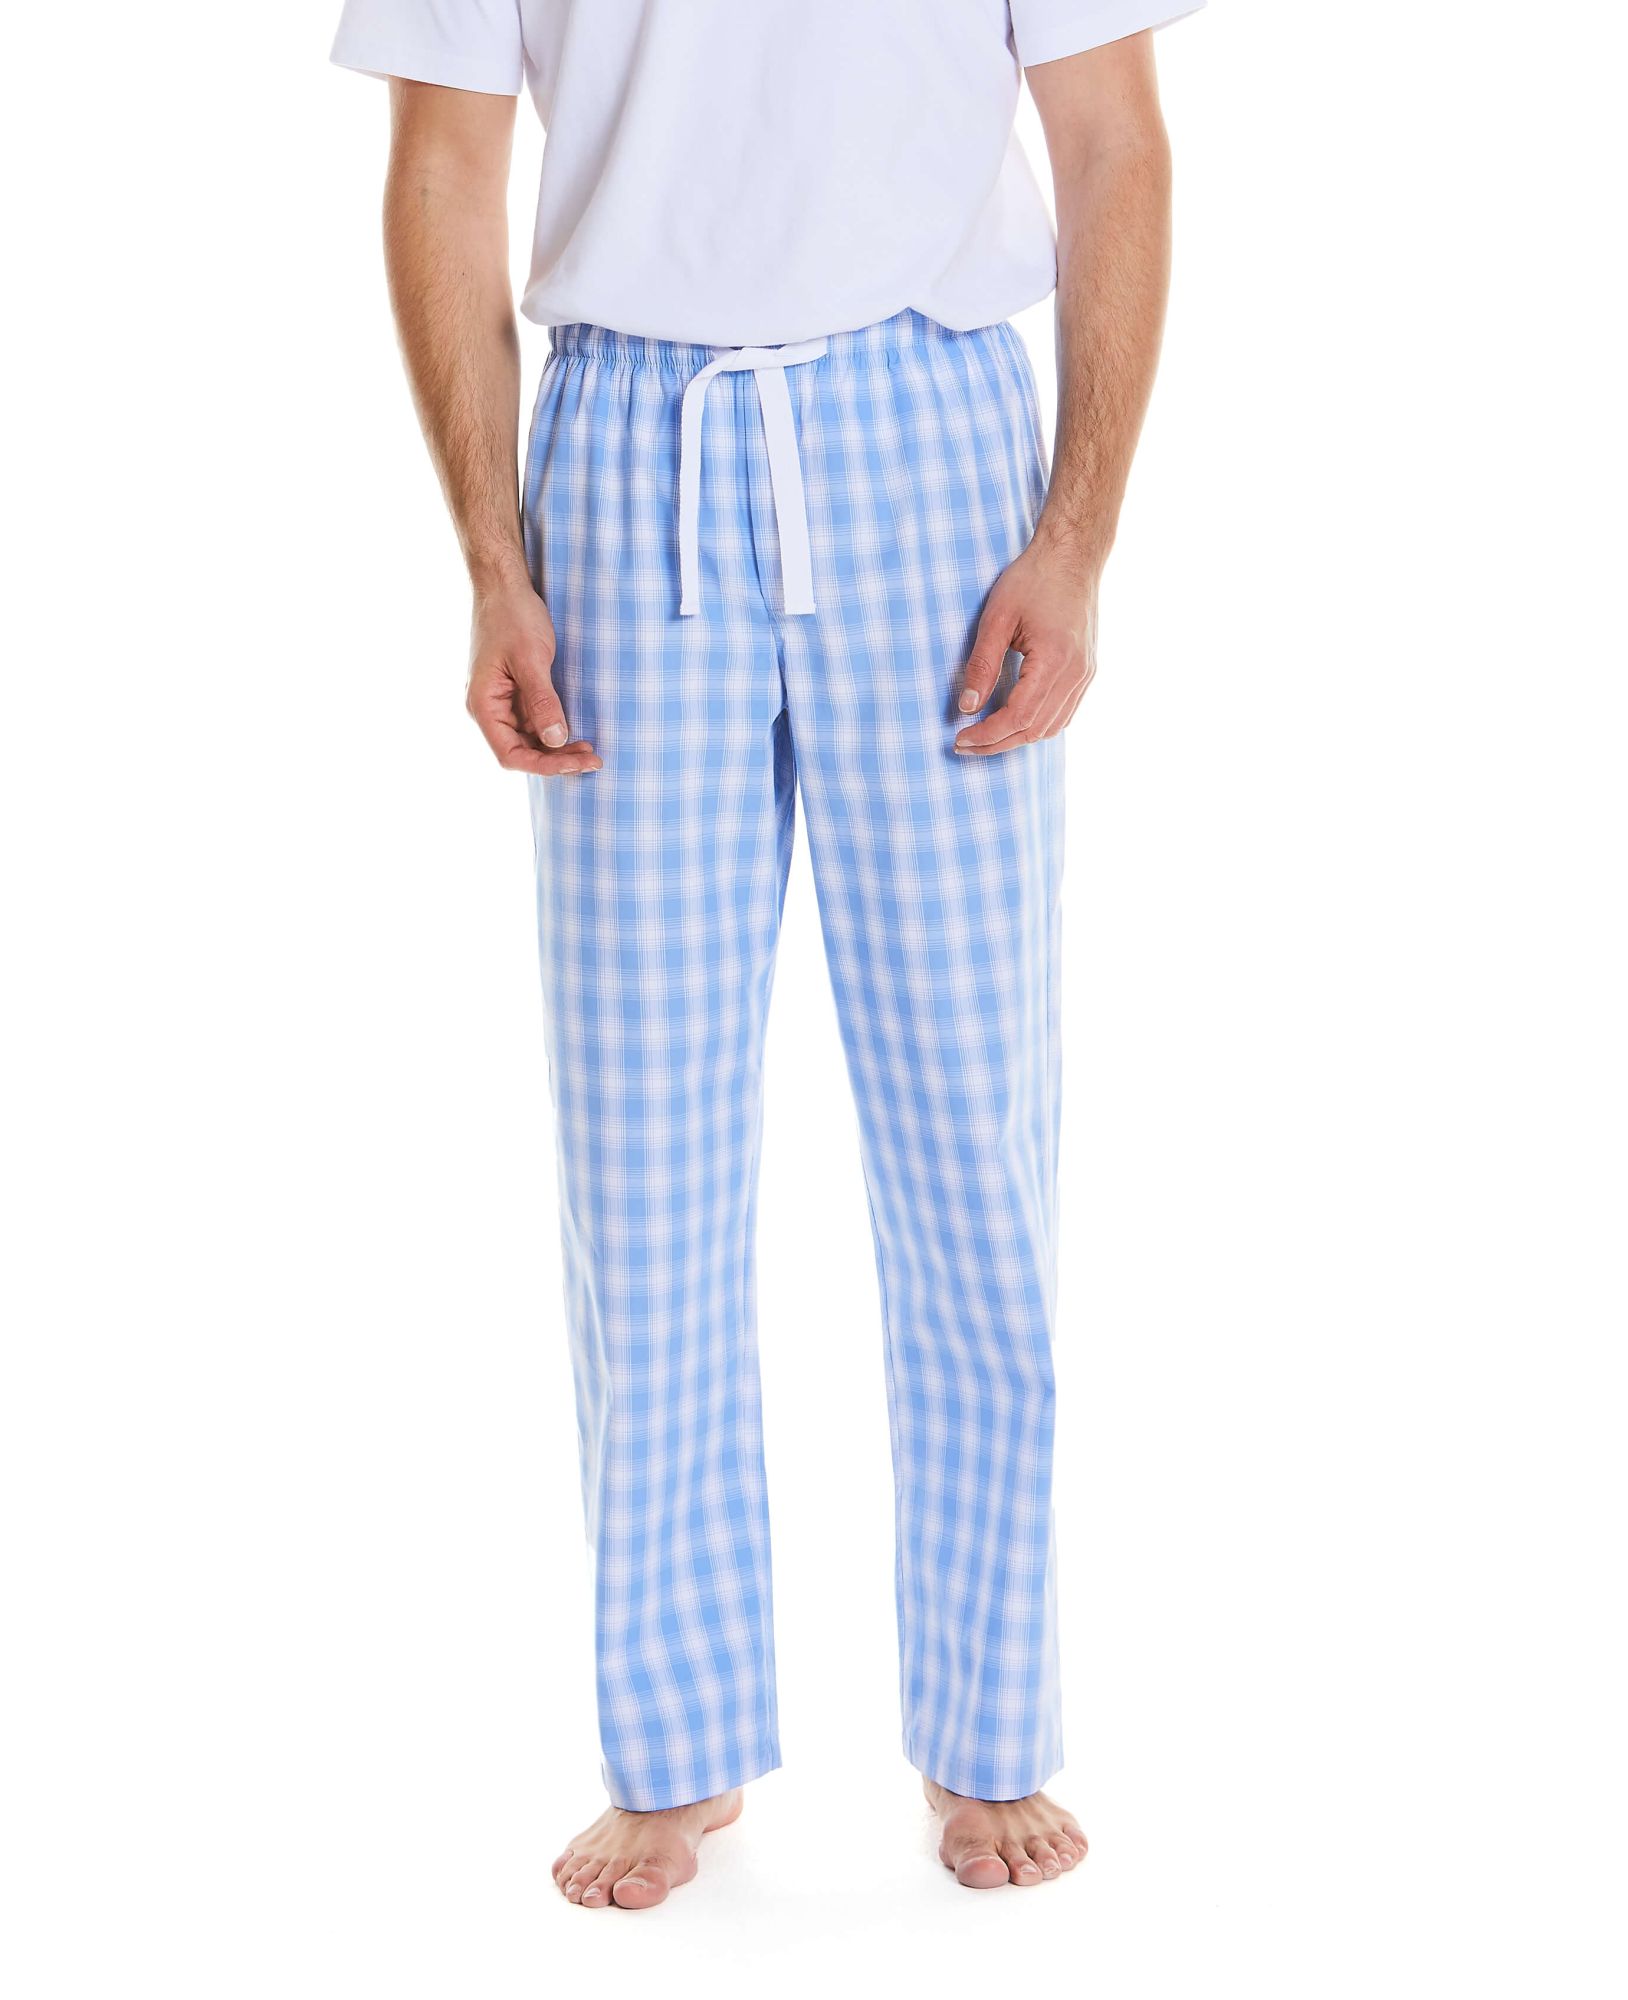 Blue White Check Cotton Lounge Pants XL by Savile Row Company